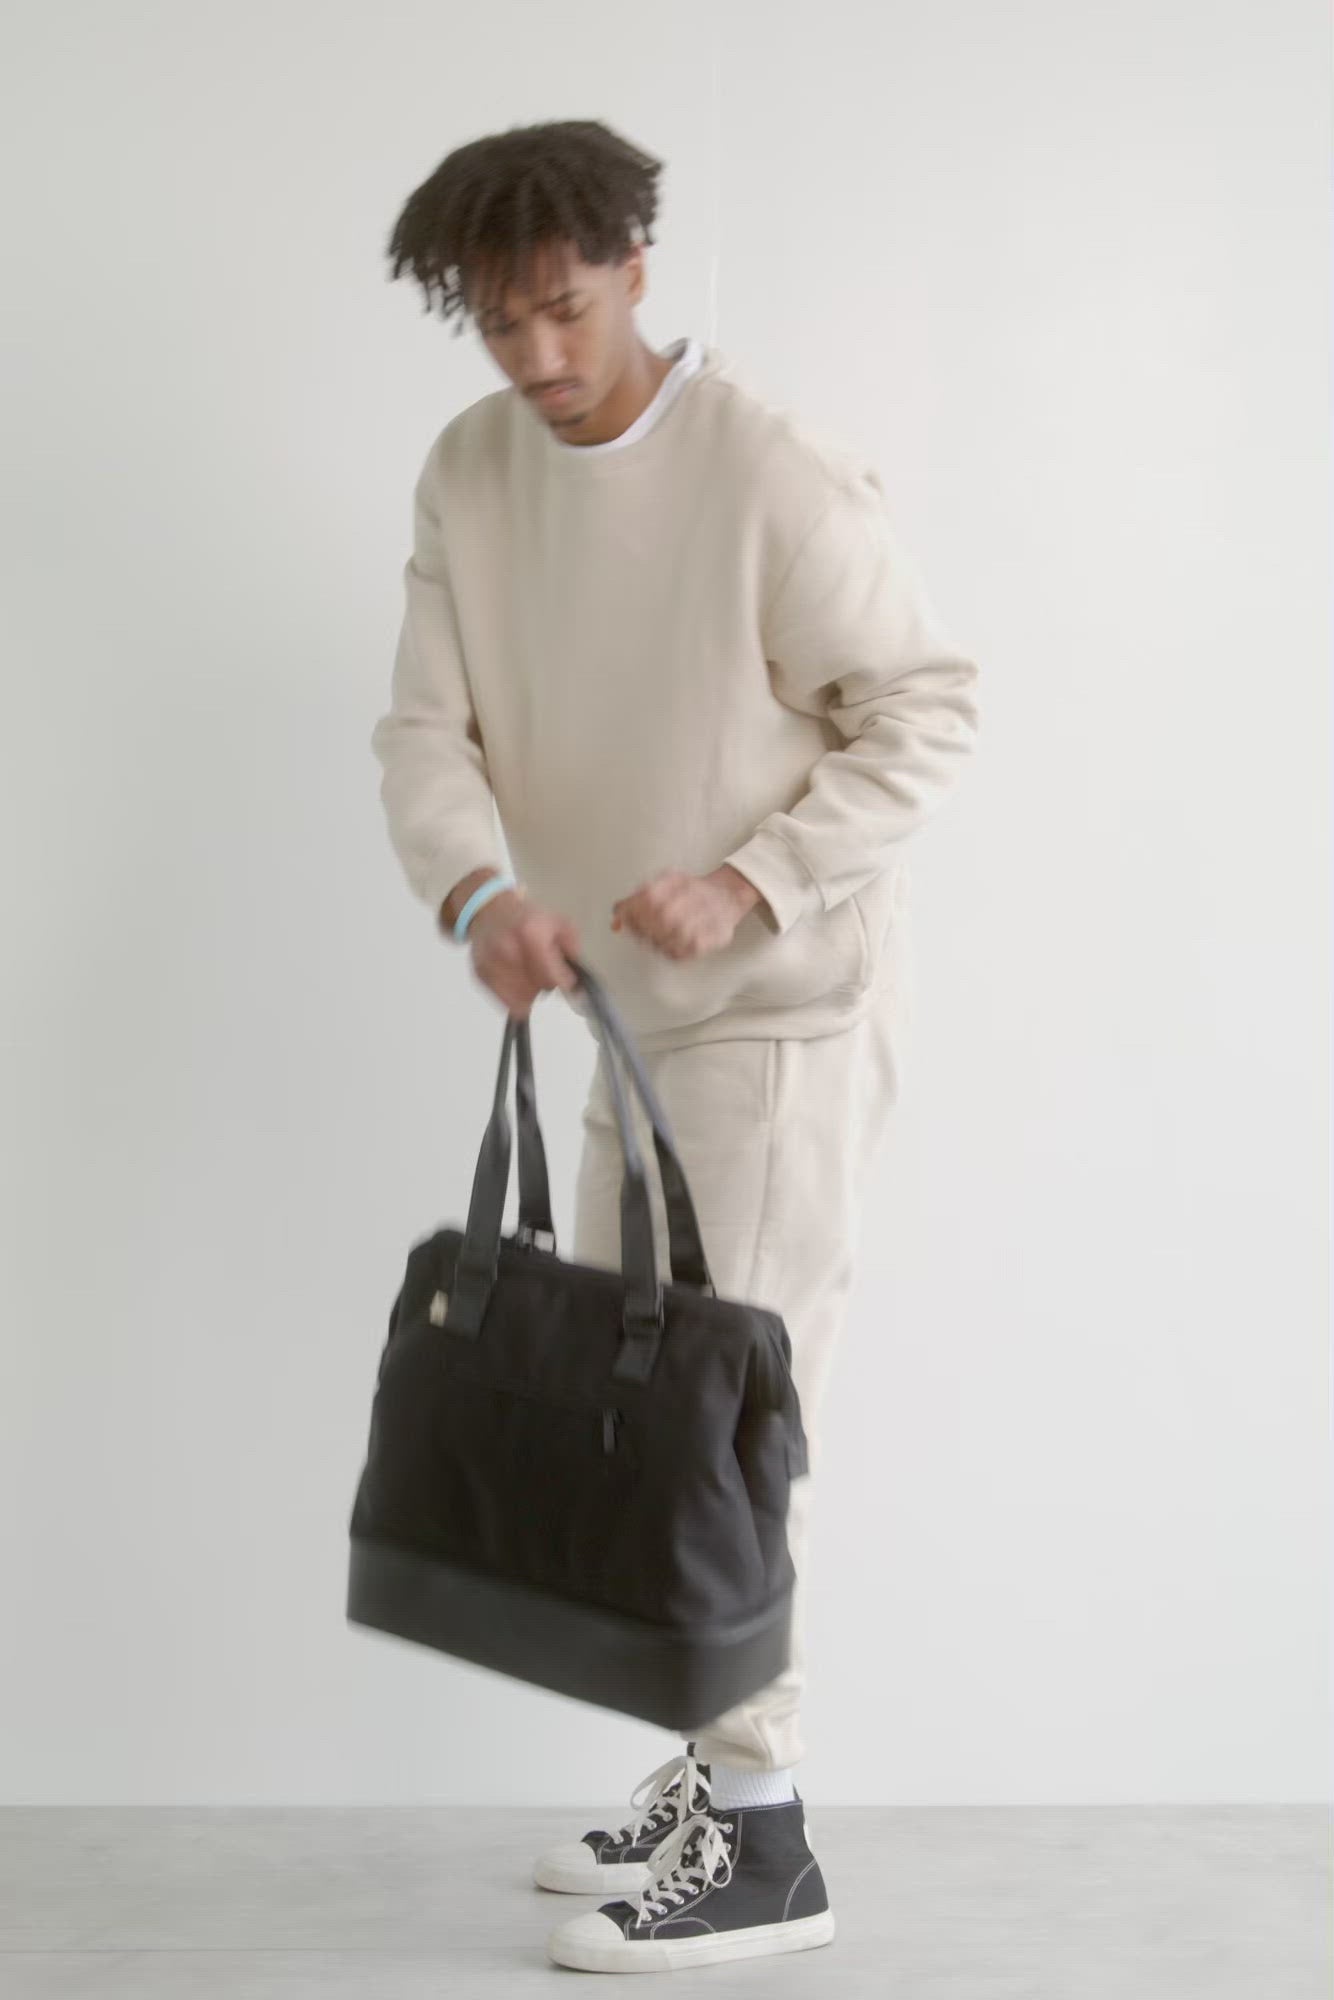 Should Men Carry Tote Bags?